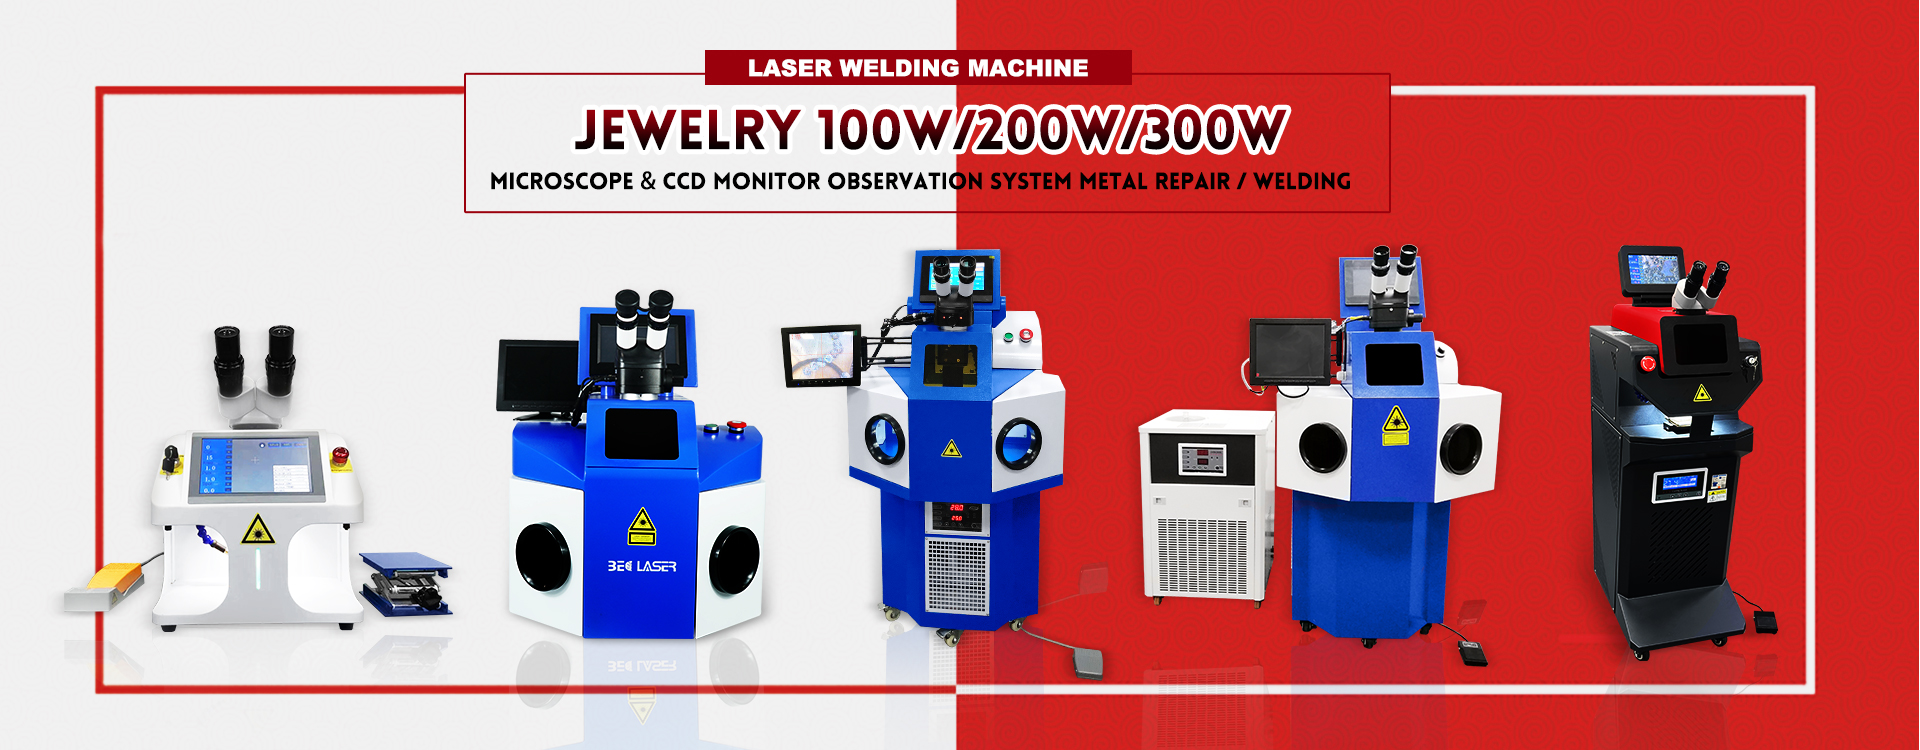 laser welding machines